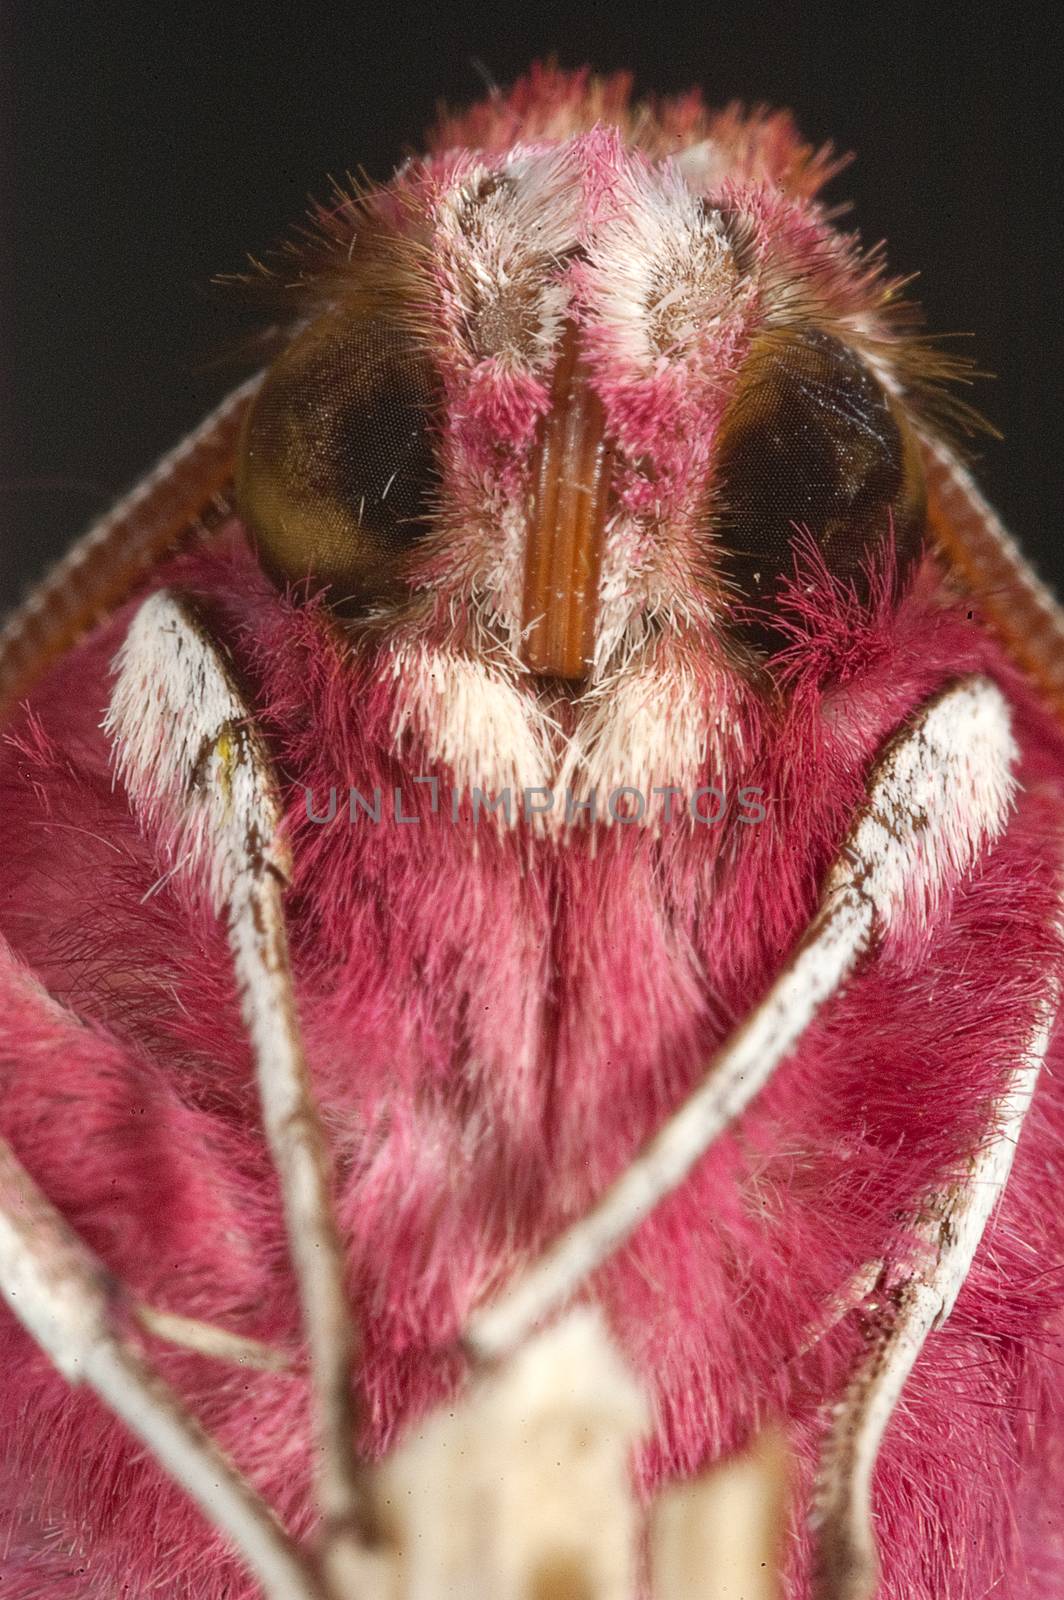 hawk moth (Deilephila porcellus) close-up  by jalonsohu@gmail.com